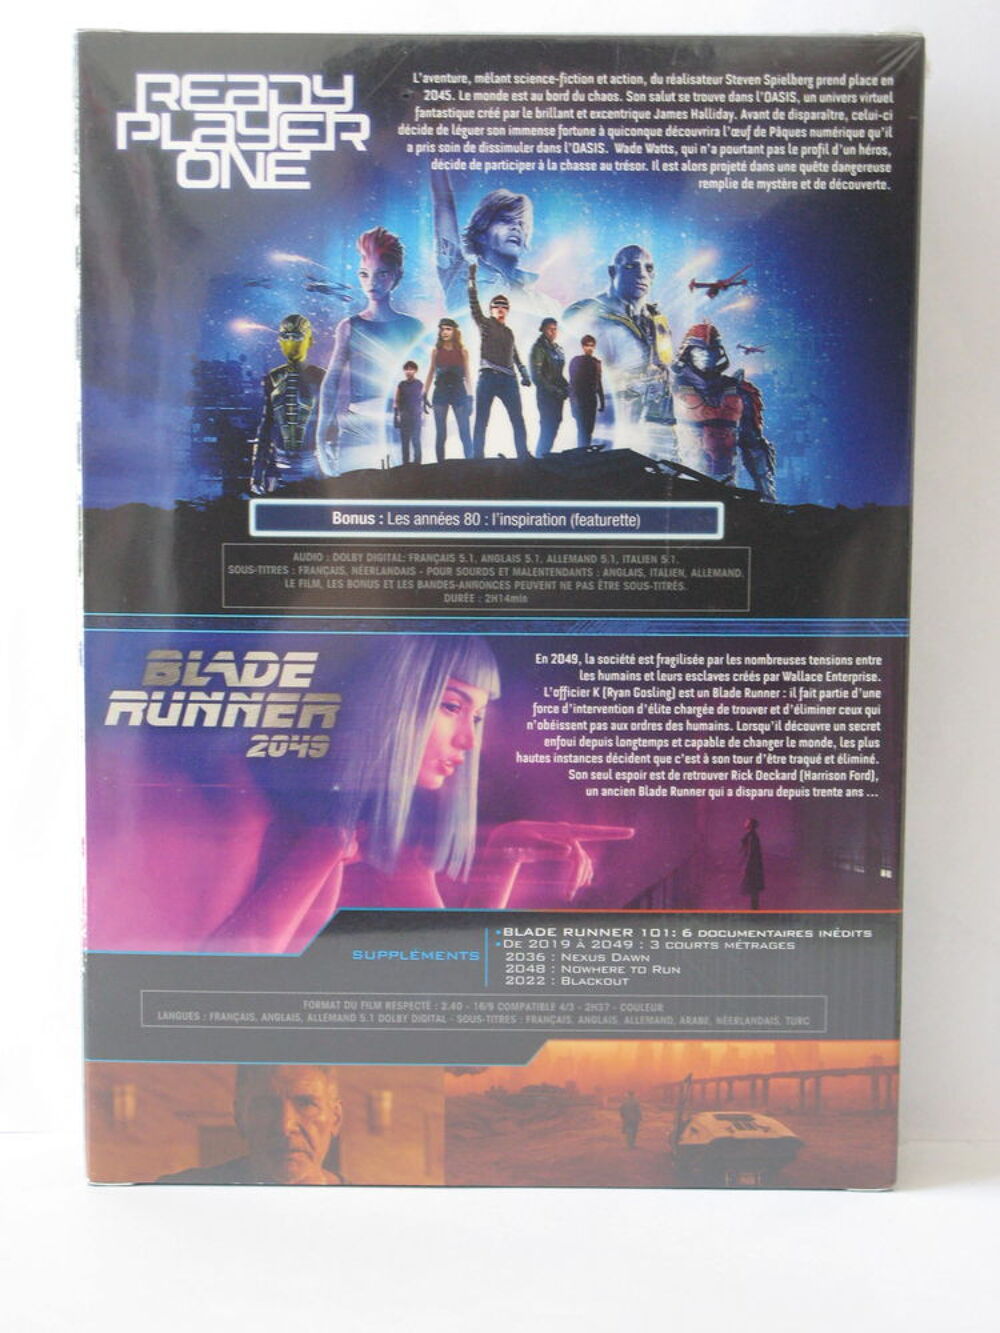 Ready player One et Blade Runer 2045 DVD et blu-ray